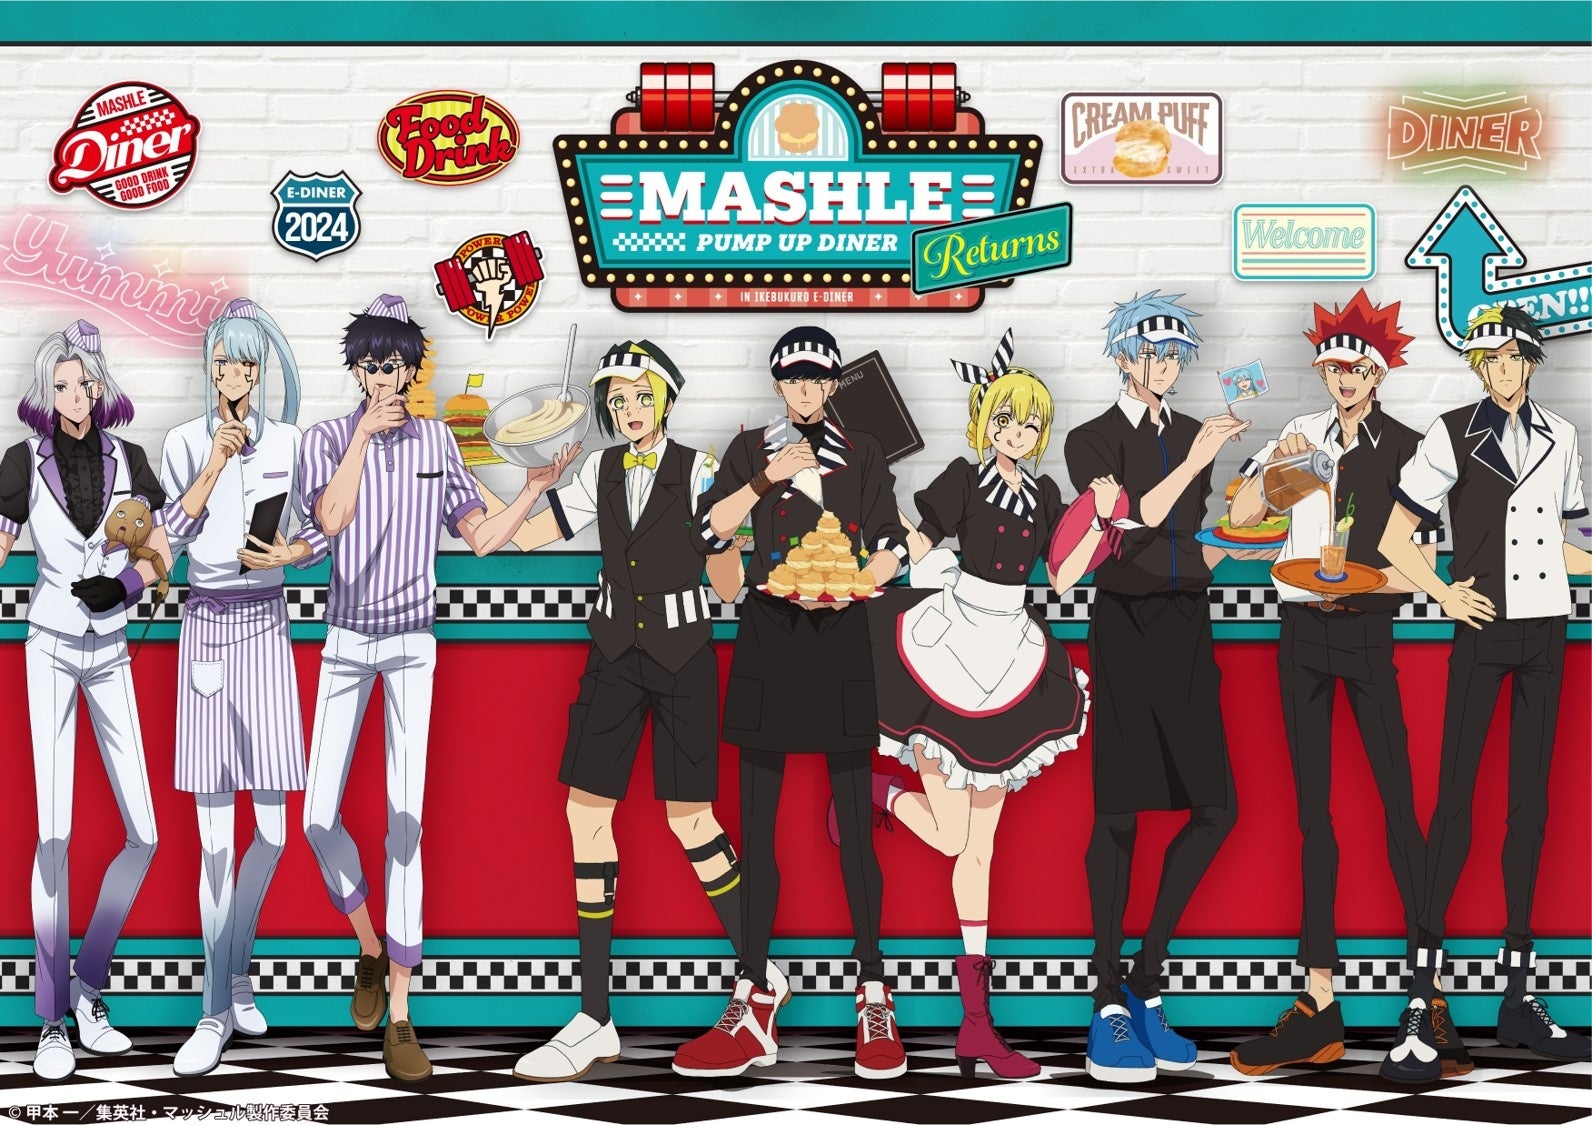 TVアニメ『マッシュル-MASHLE-』PUMP UP DINER IN IKEBUKURO E-DINER Returns 開催決定！